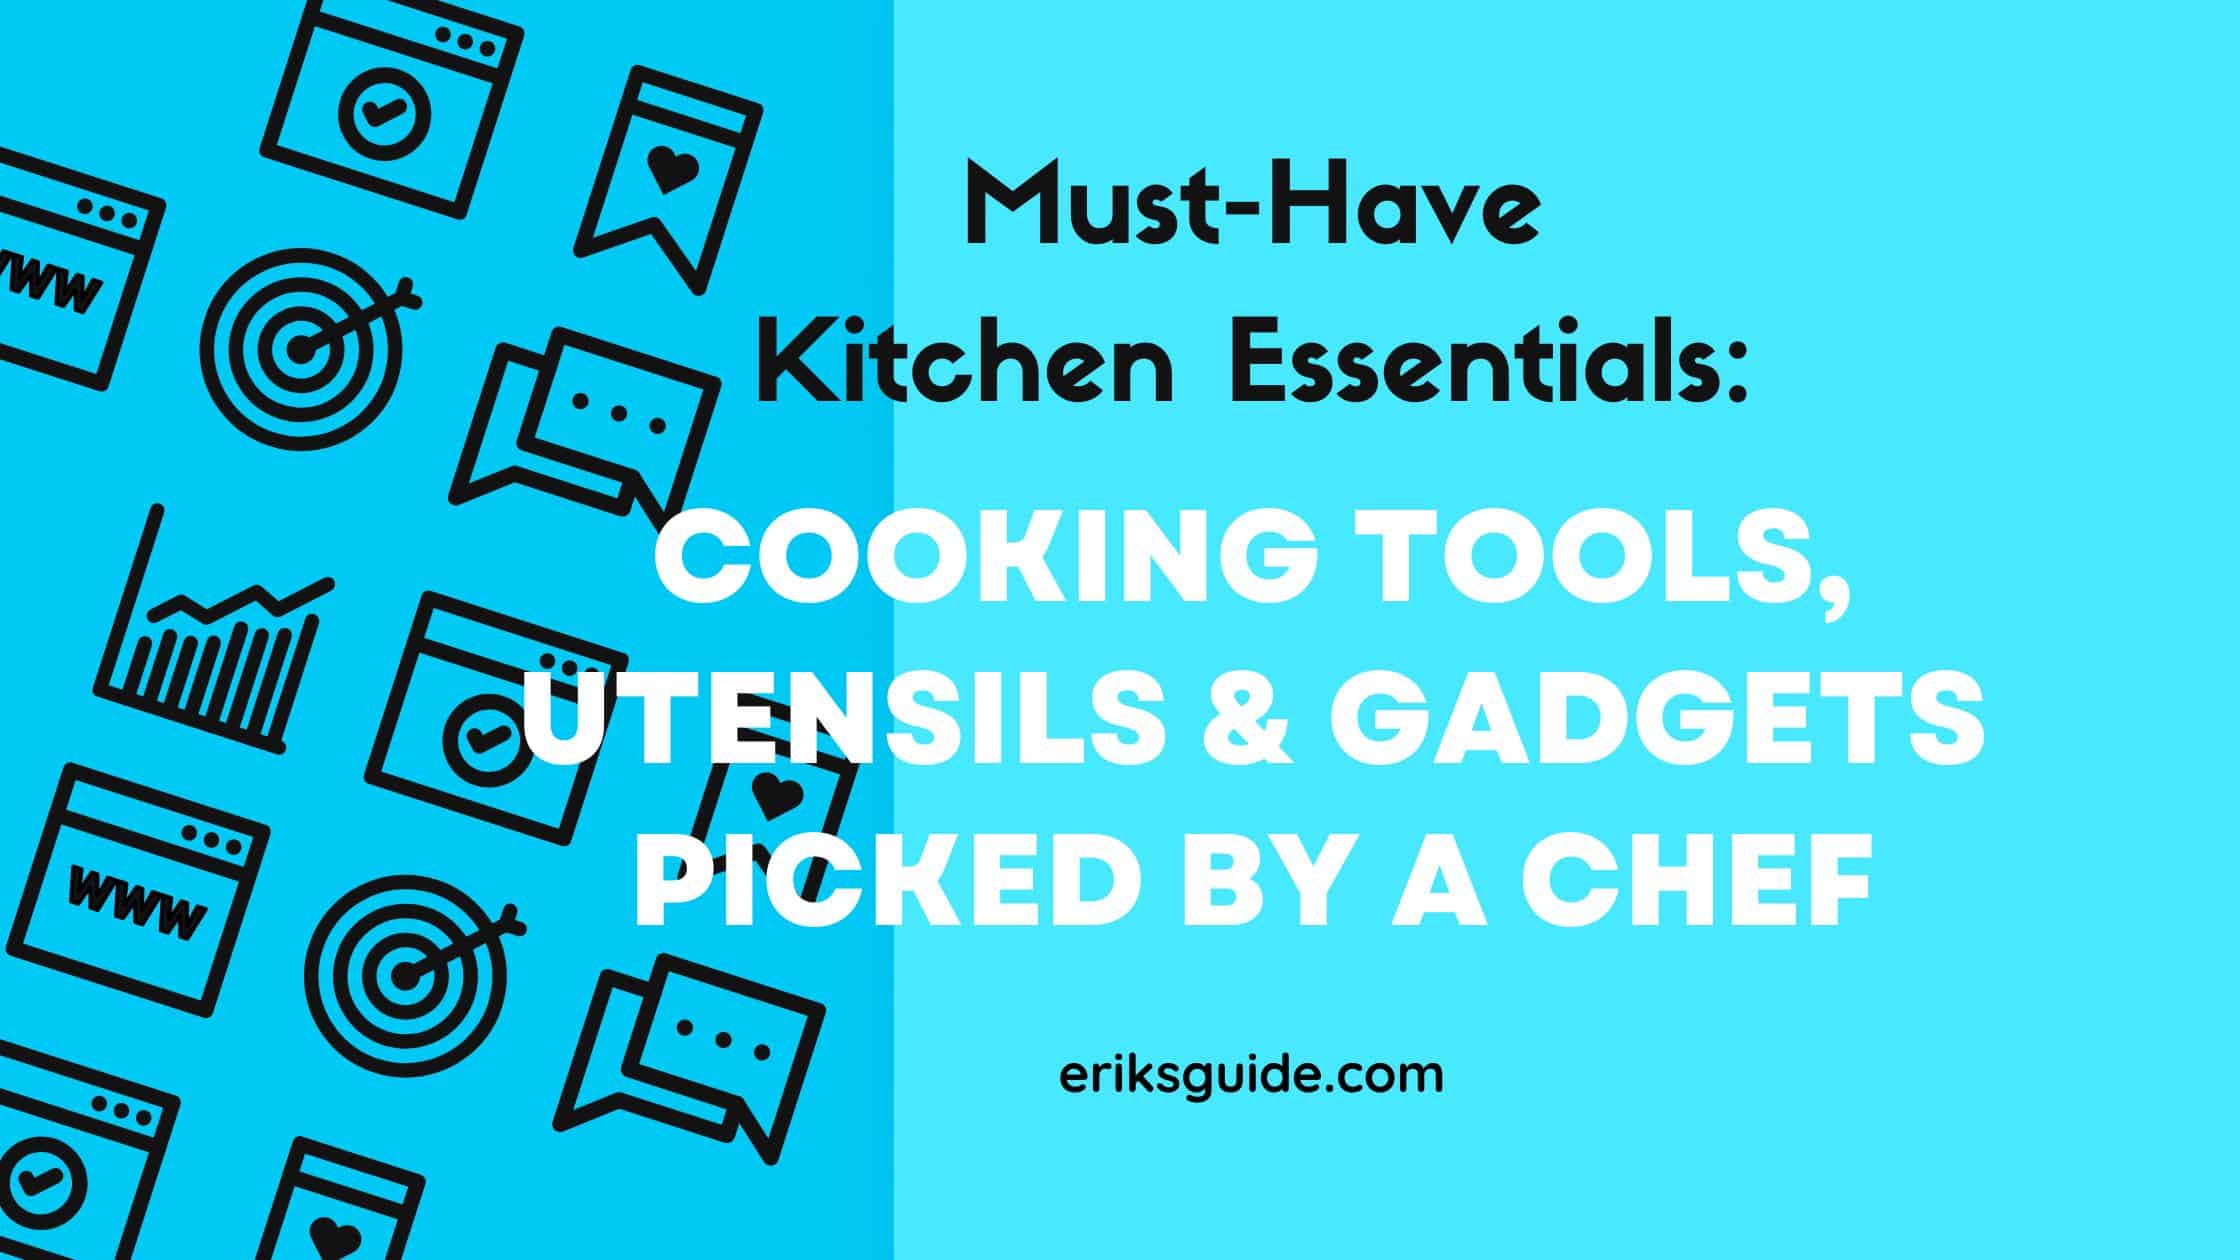 https://eriksguide.com/wp-content/uploads/2022/10/kitchen-essentials-cooking-tools.jpg